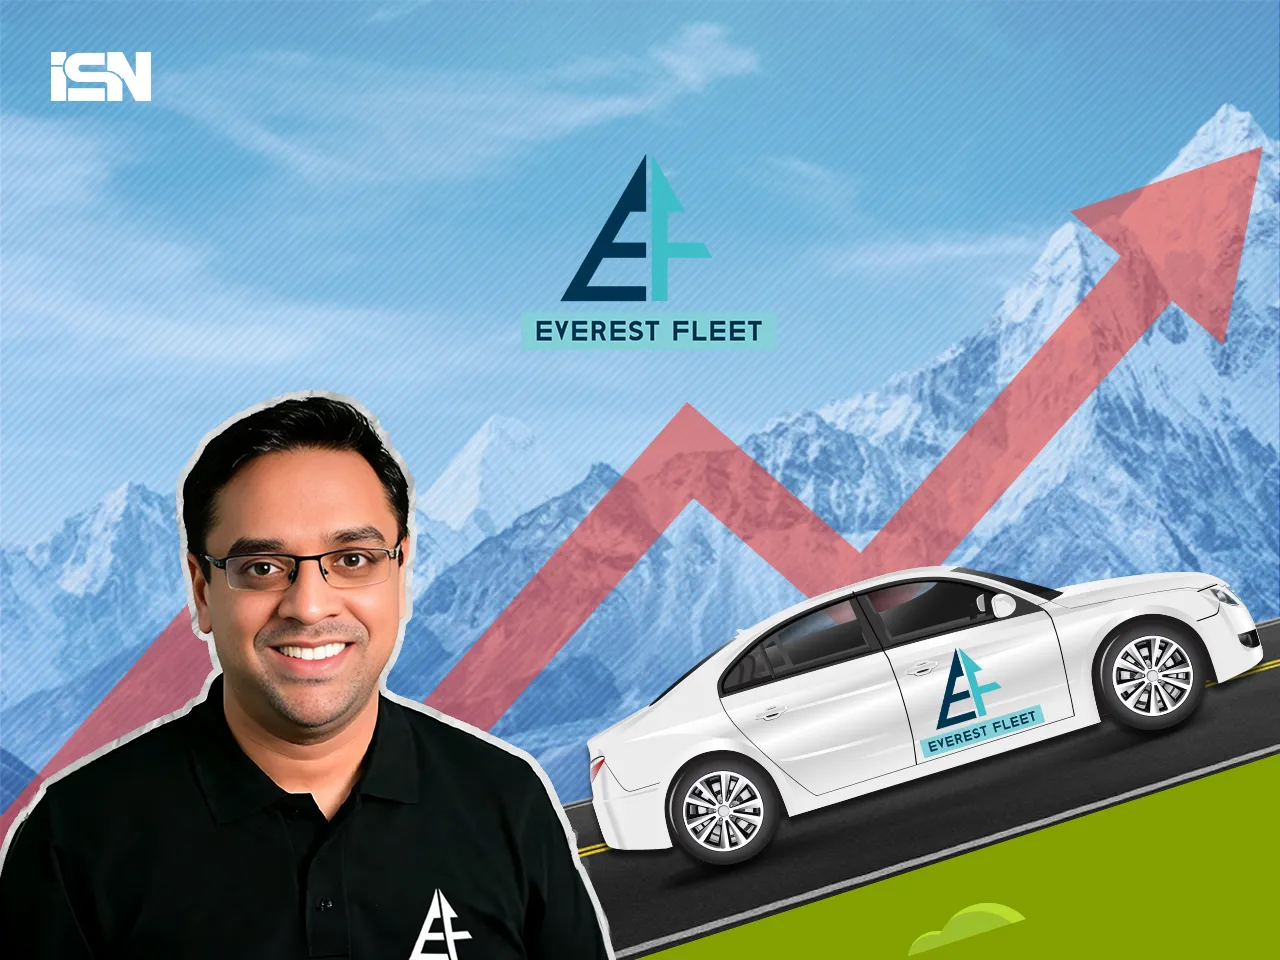 Fleet management startup Everest Fleet reports Rs 466Cr revenue; Profit stood at Rs 41Cr